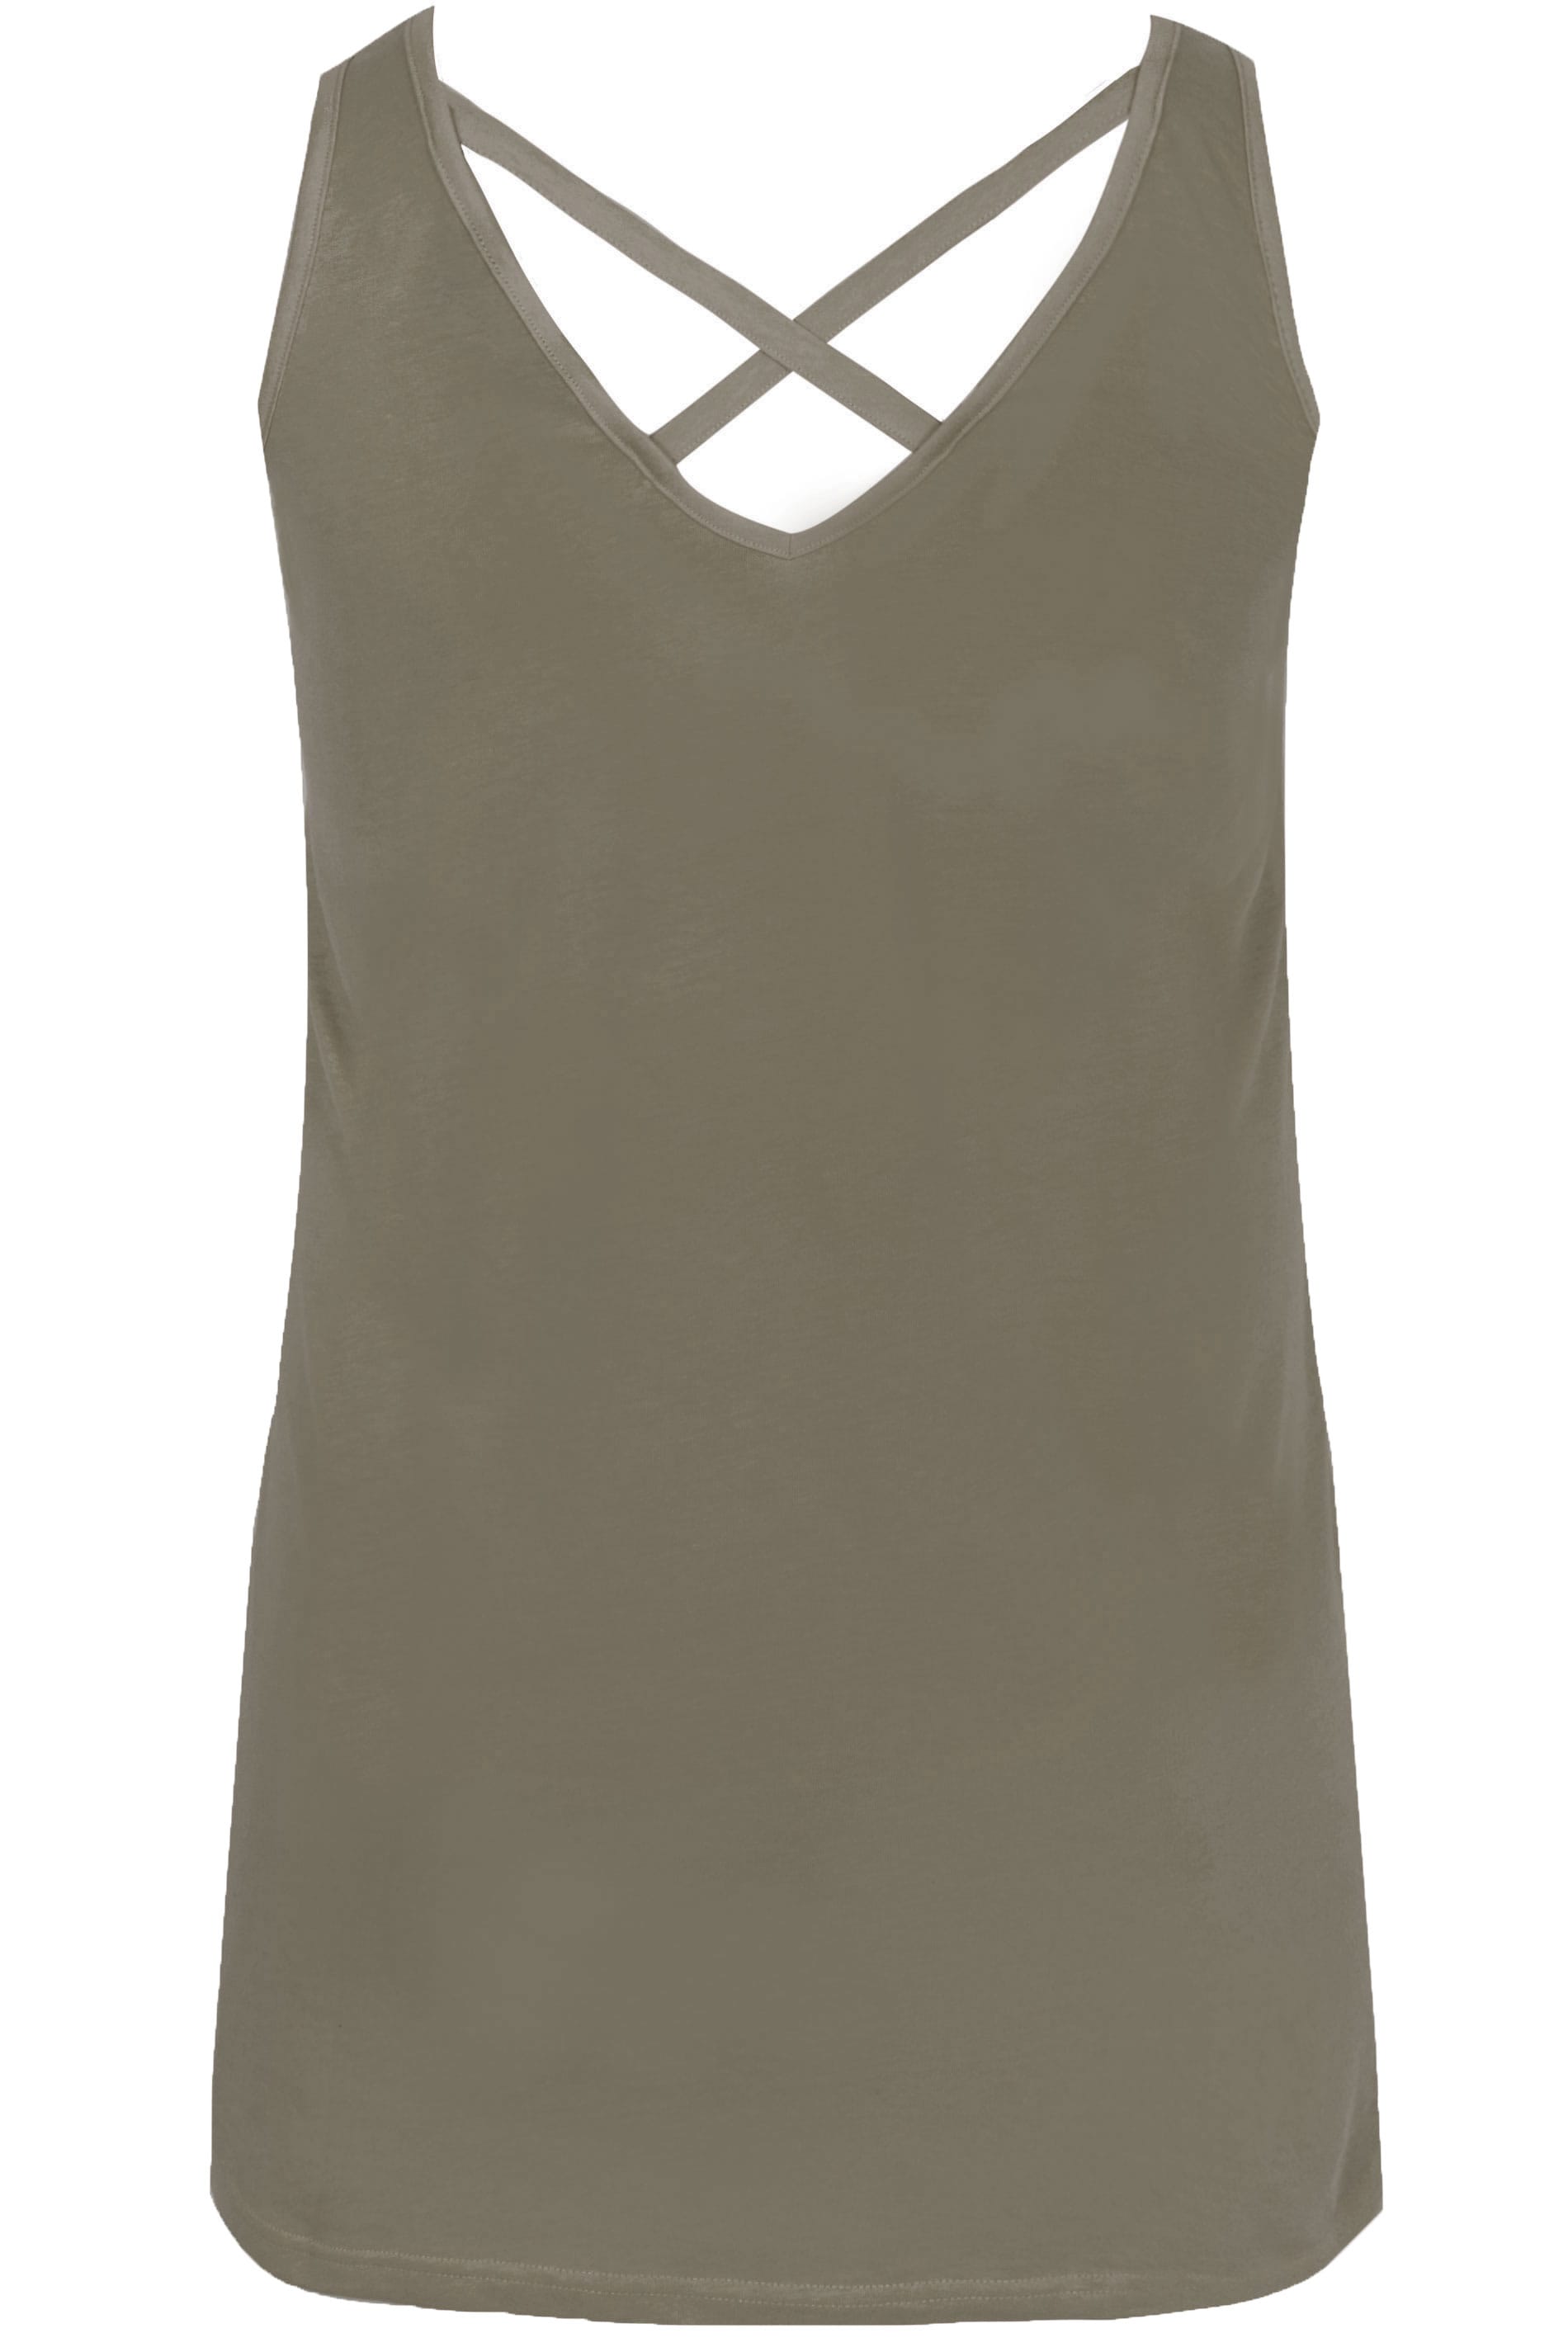 Khaki Cross Back Vest Top | Yours Clothing